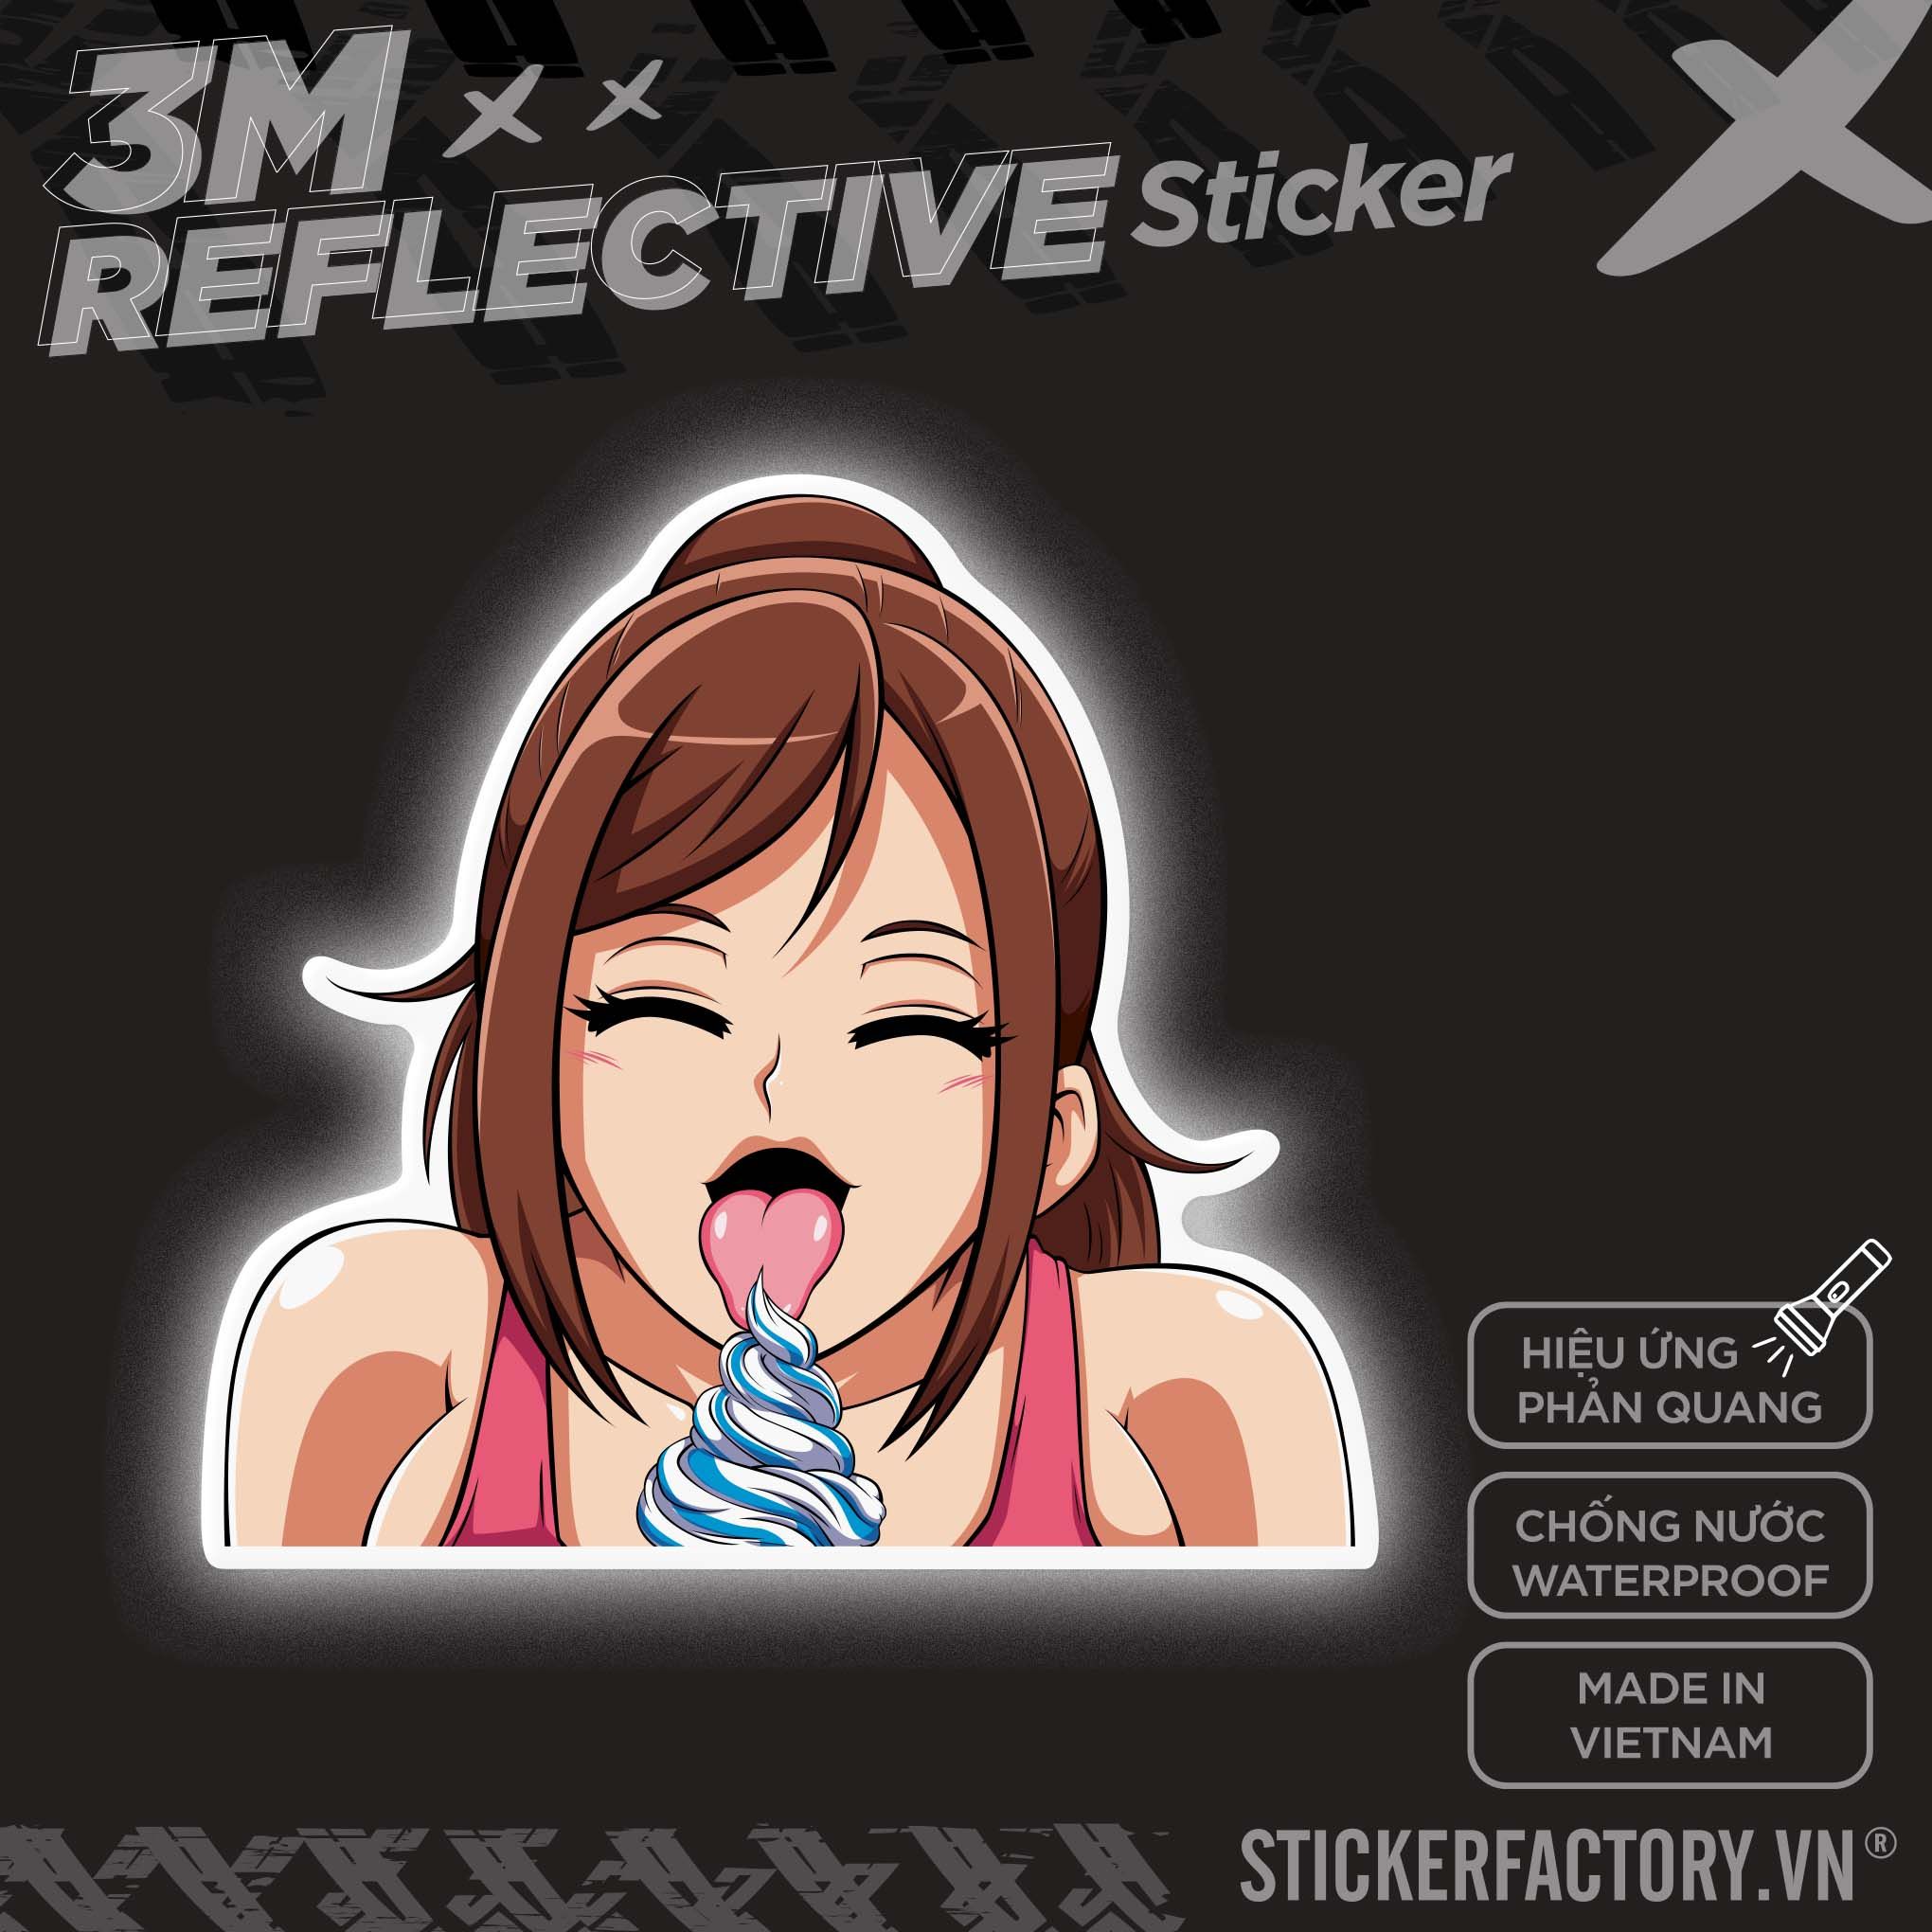 GIRL ANIME ICE-CREAM 3M - Reflective Sticker Die-cut